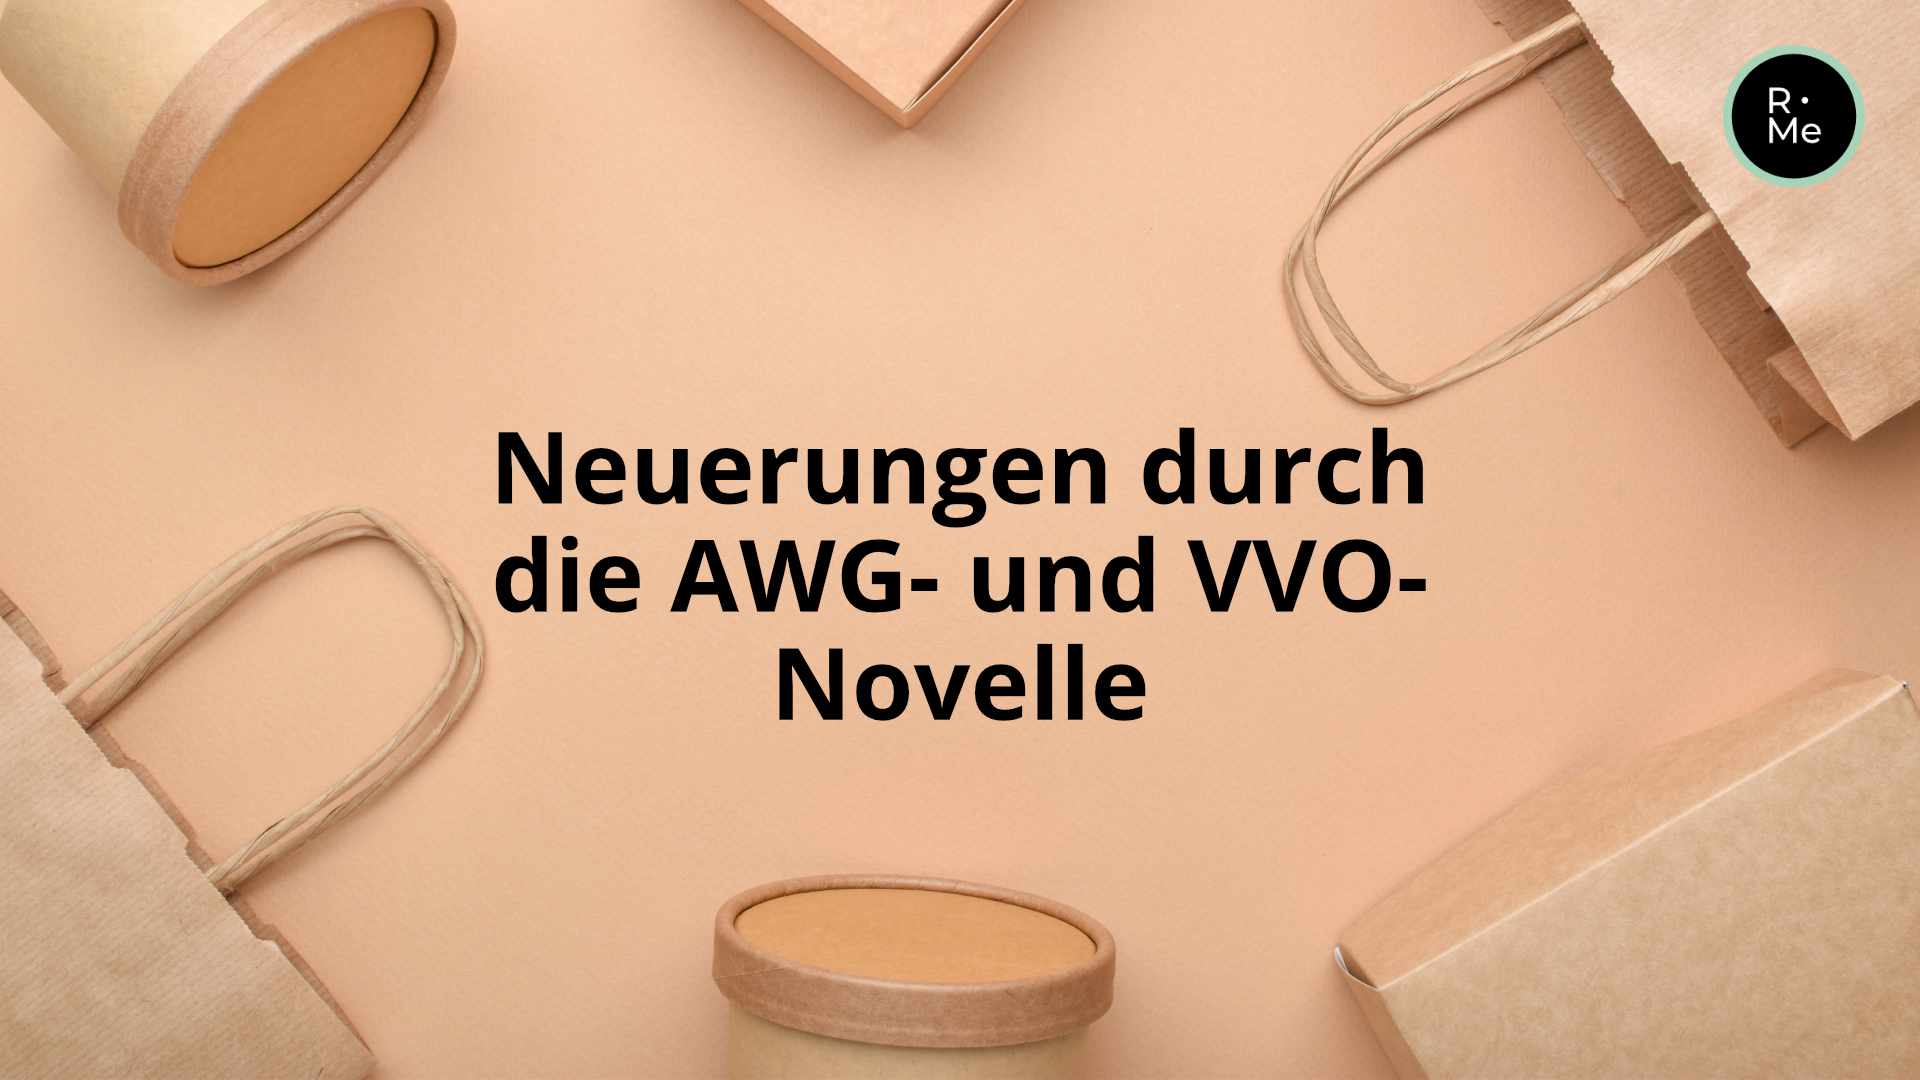 Titel VVO und AWG Novelle - Verpackungen